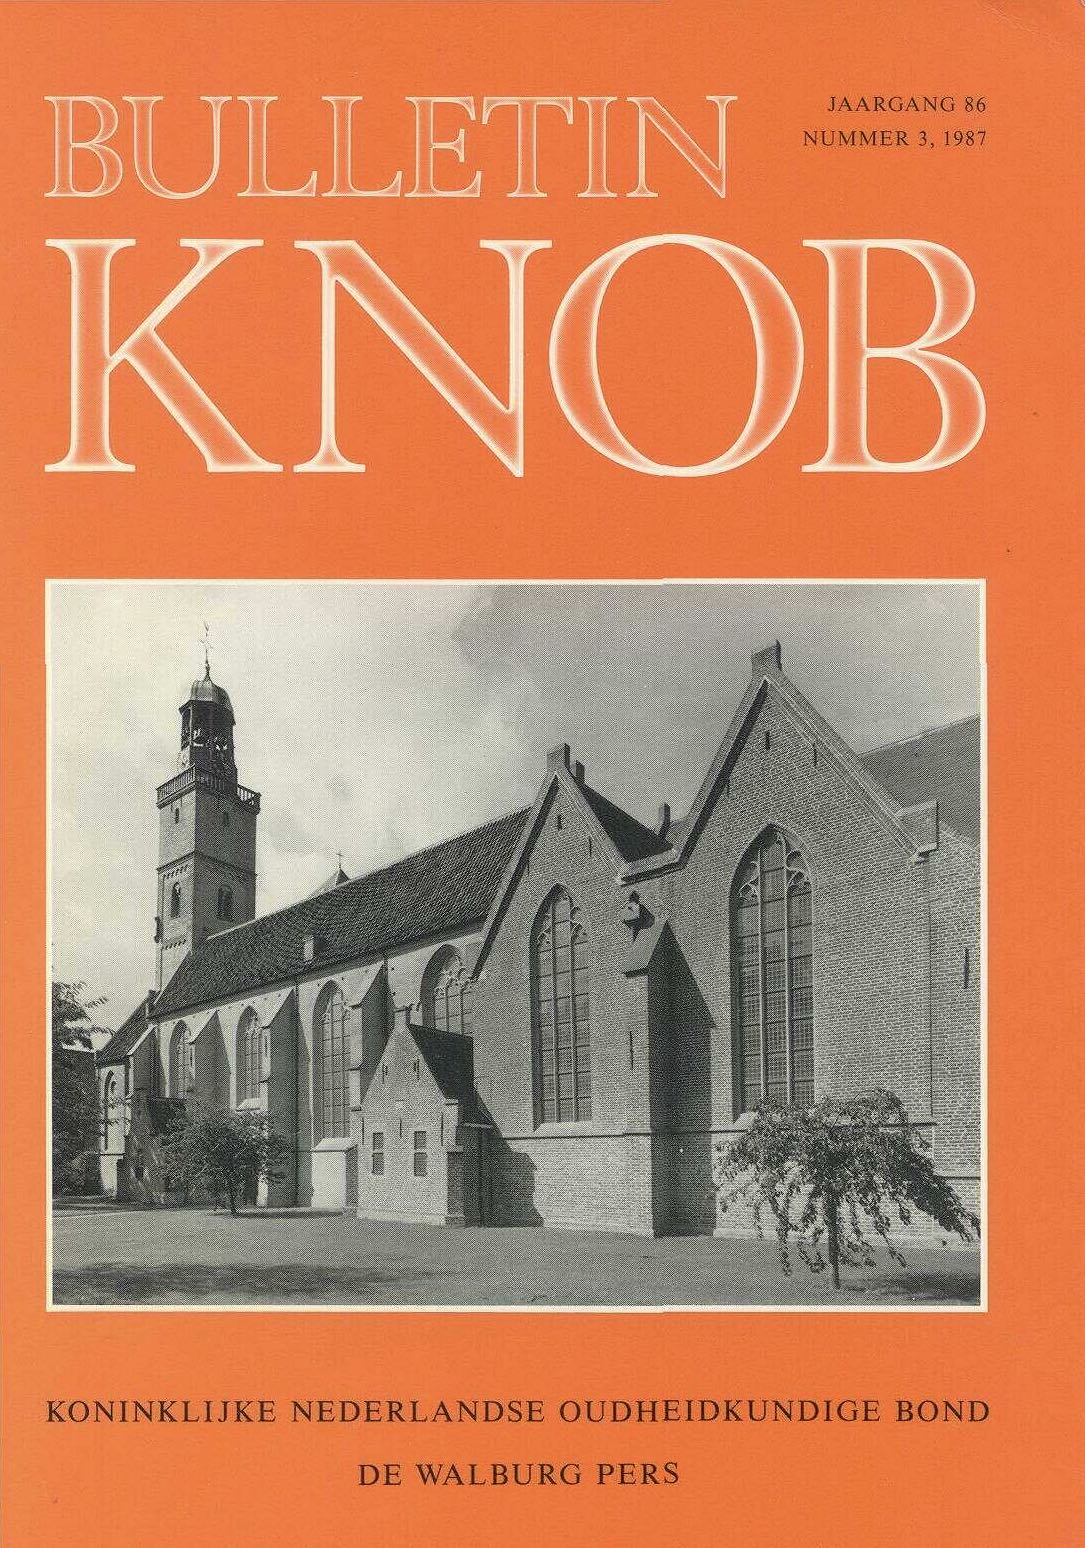 						Toon Bulletin KNOB 86 (1987) 3
					